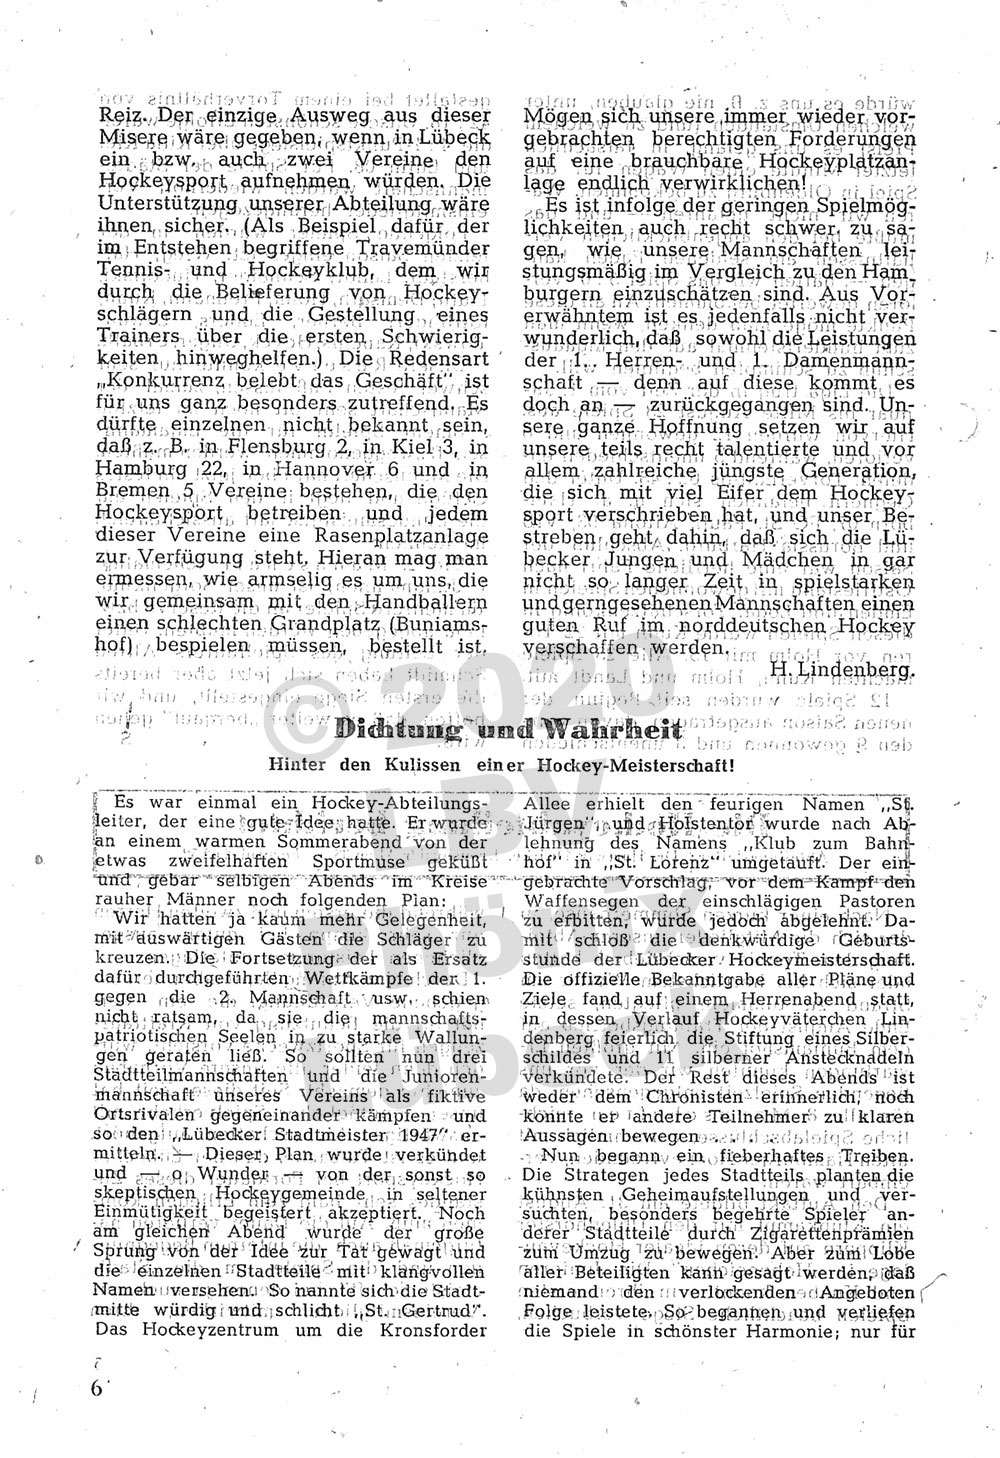 LBV Phönix Rundschreiben - Dezember 1947